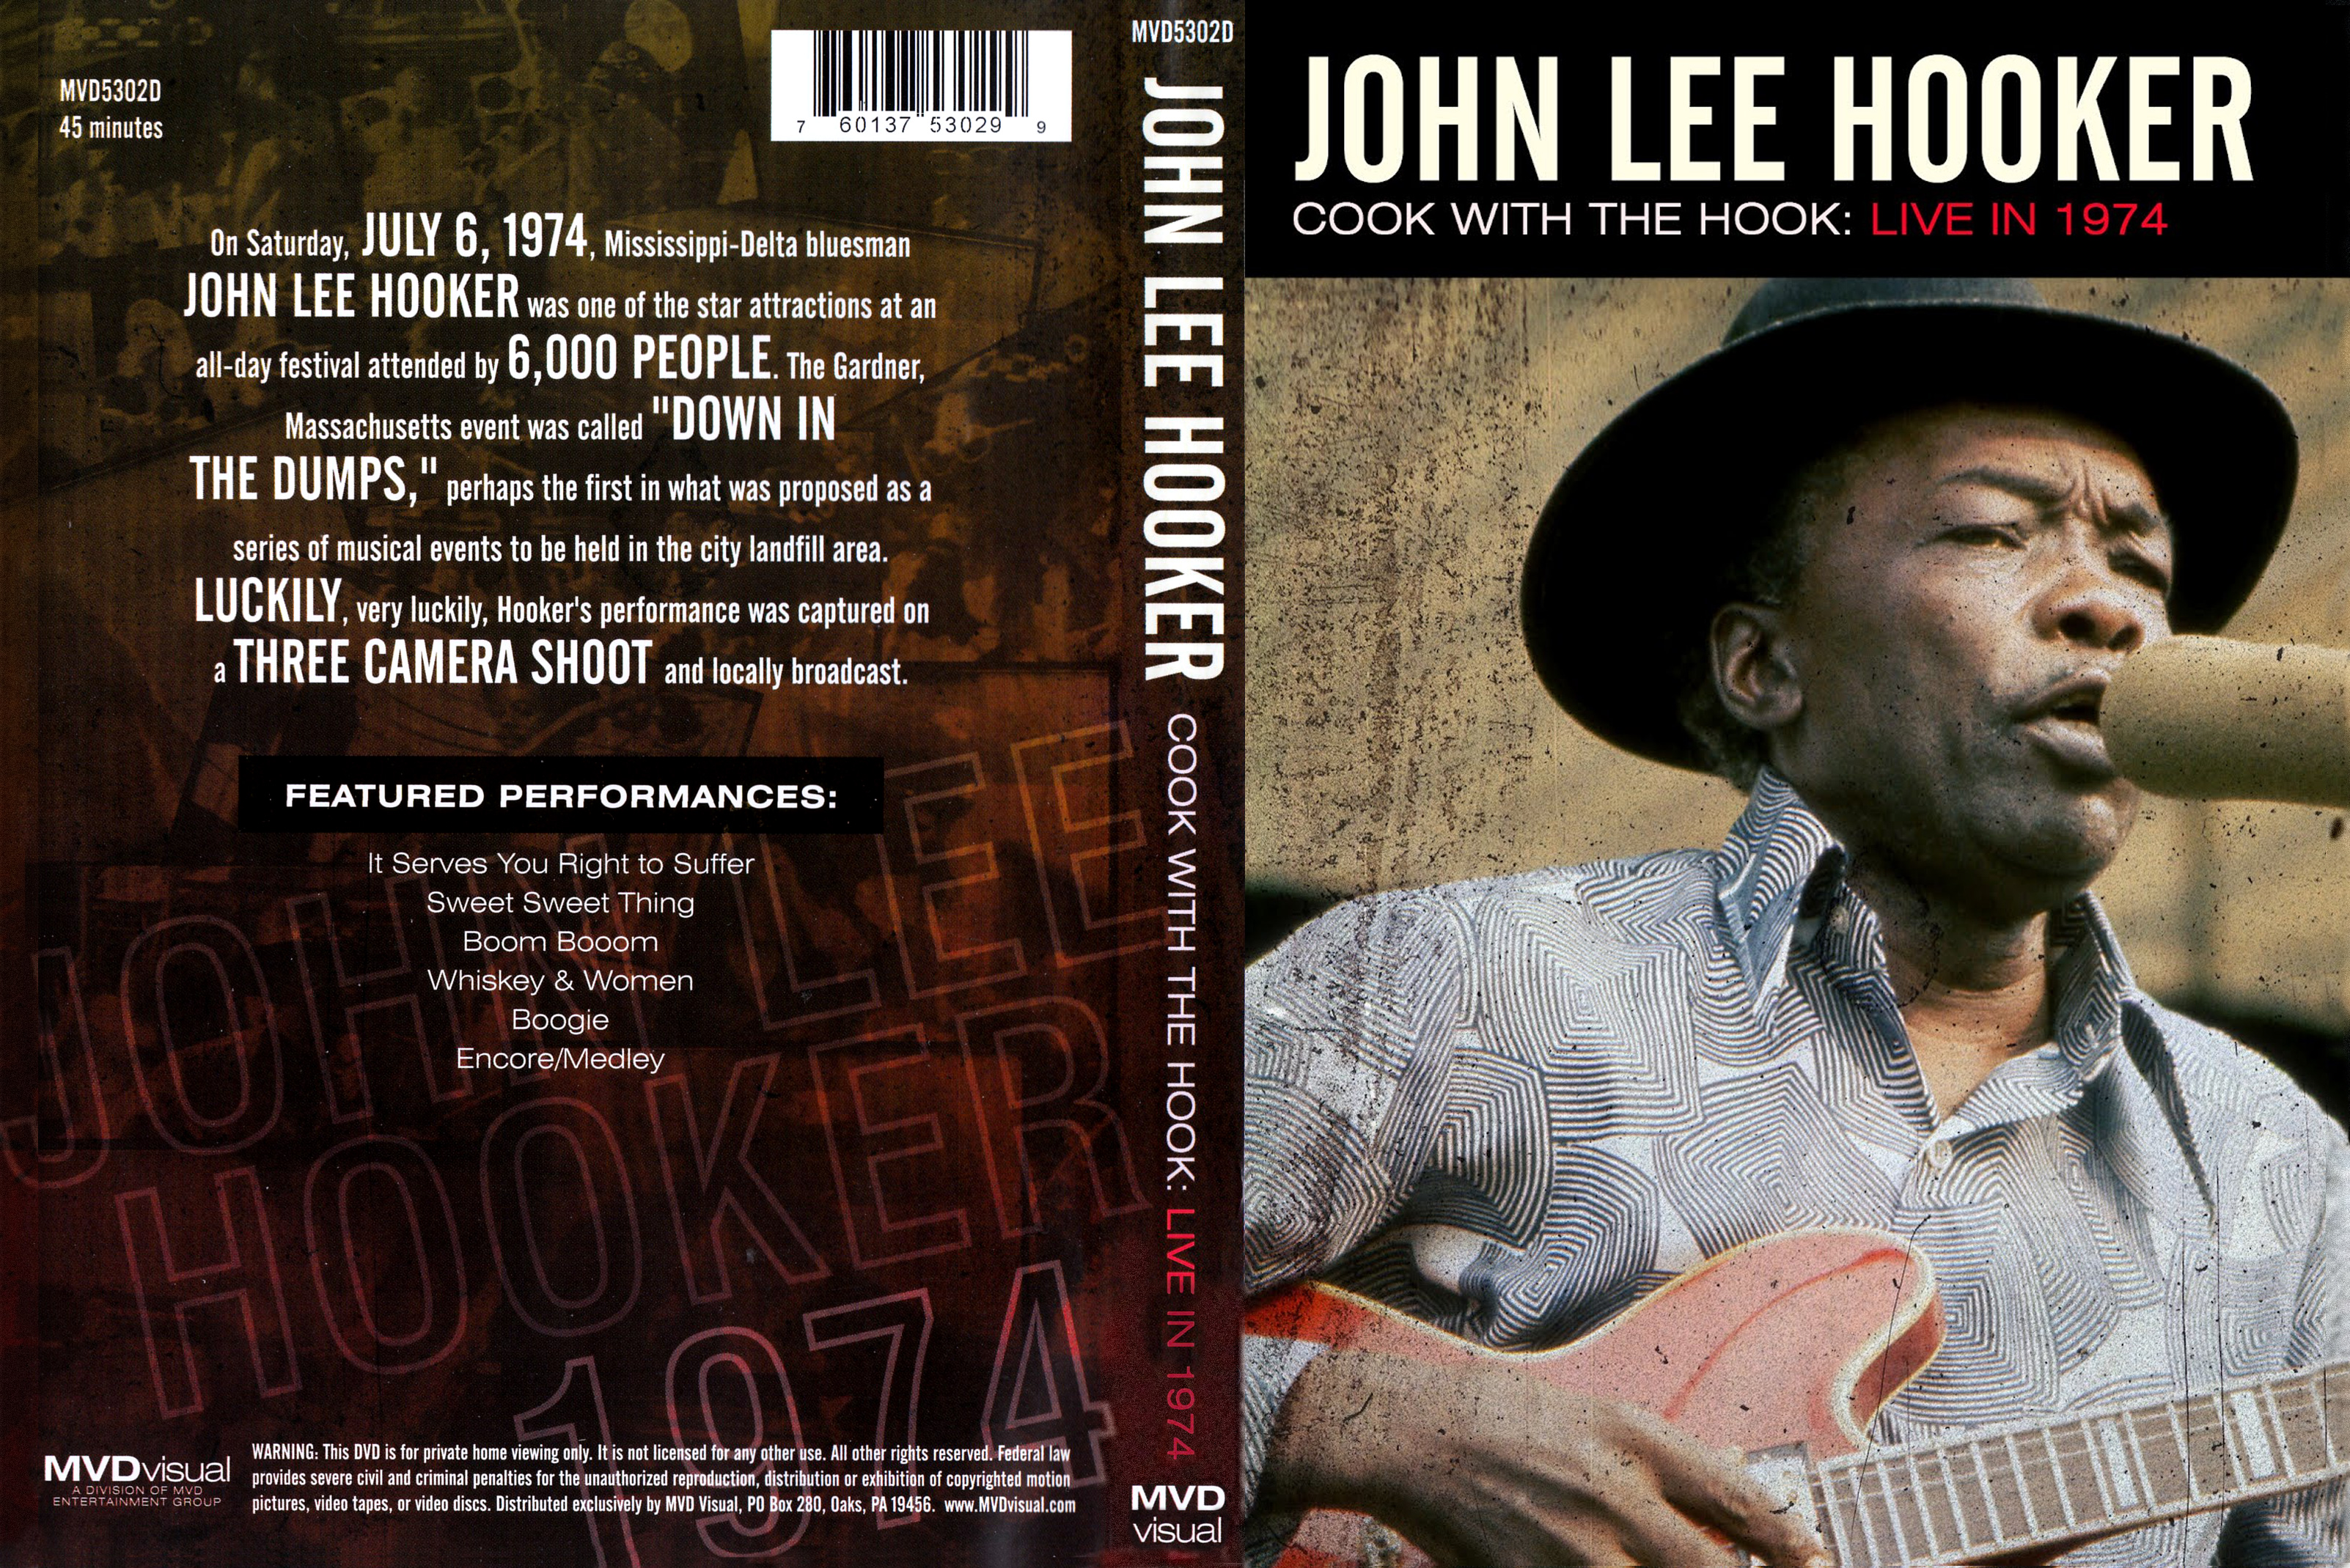 Jaquette DVD John Lee Hooker - Cook with the hook live 1974